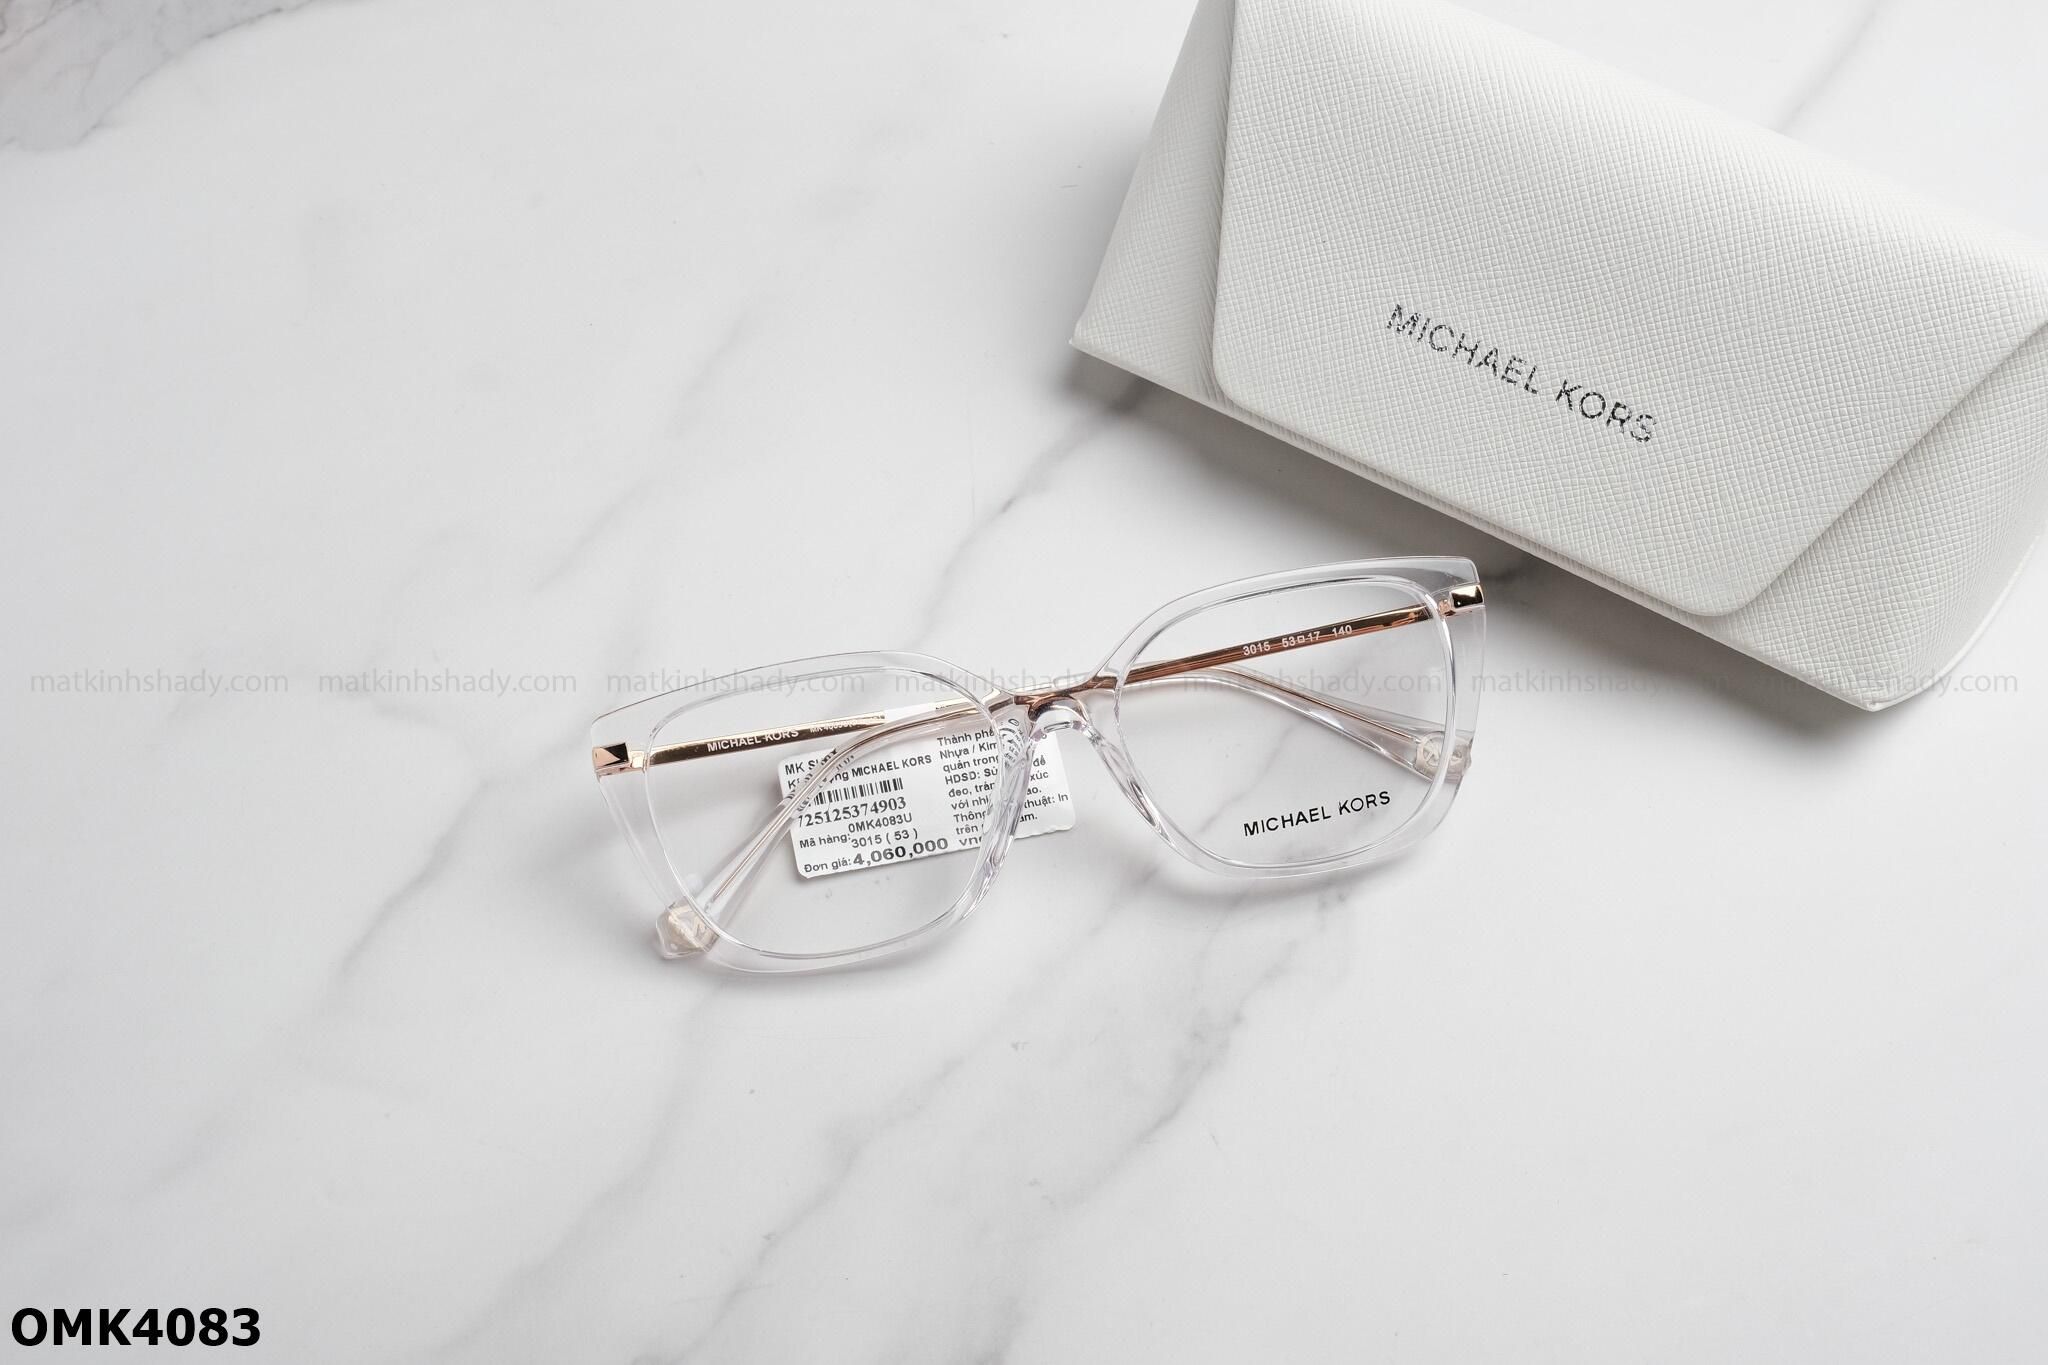  Michael Kors Eyewear - Glasses - 0MK4083 